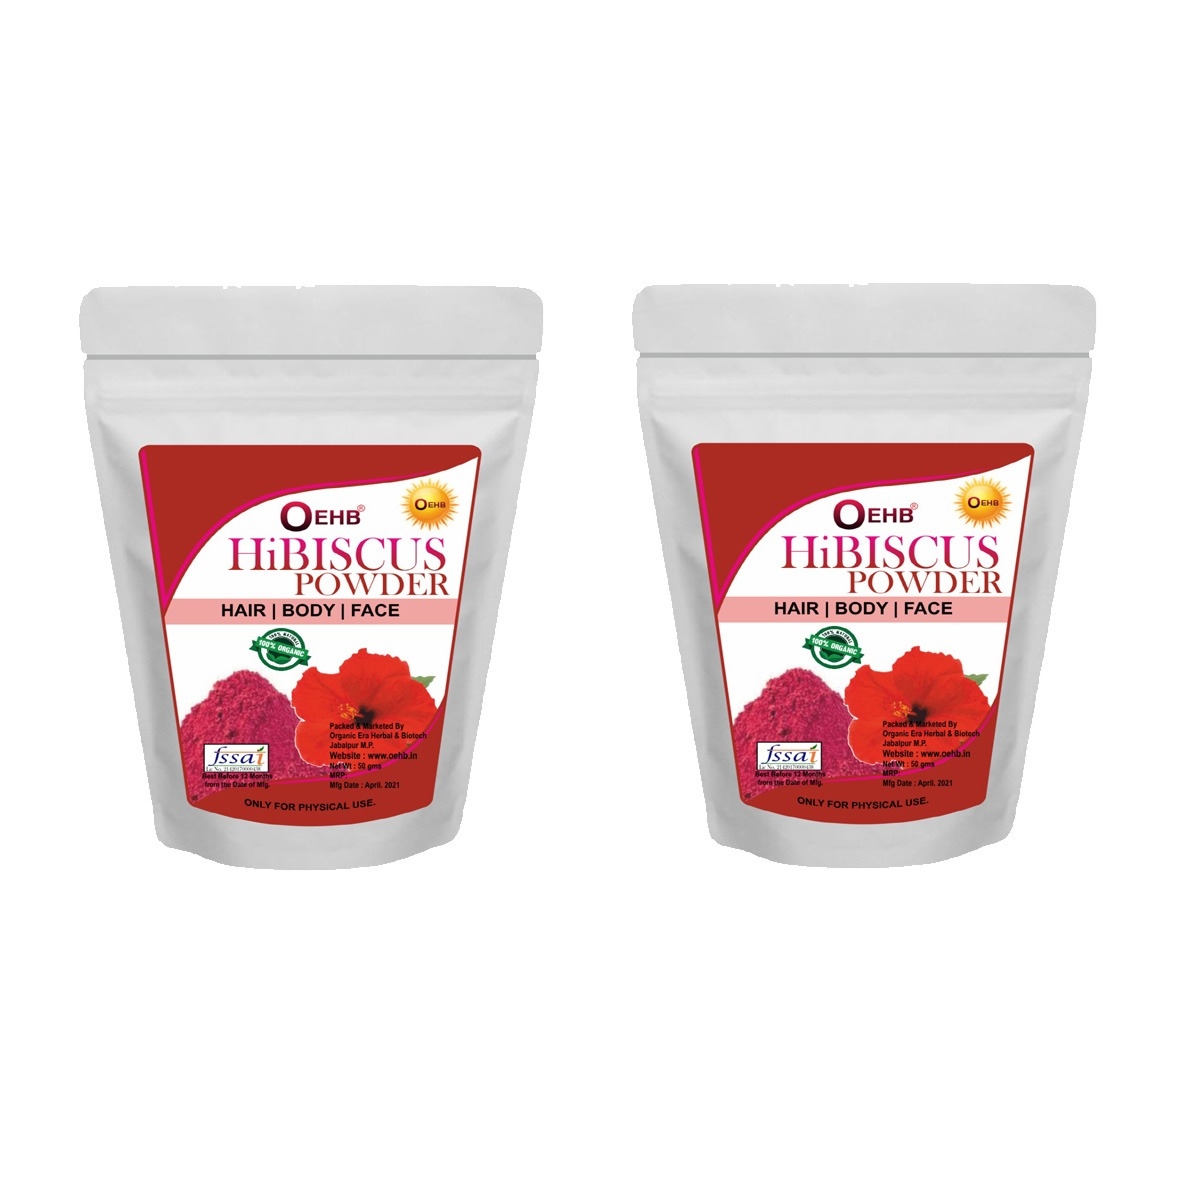 OEHB Hibiscus Powder 100g (Pack of 2 Each-50g) - 100g